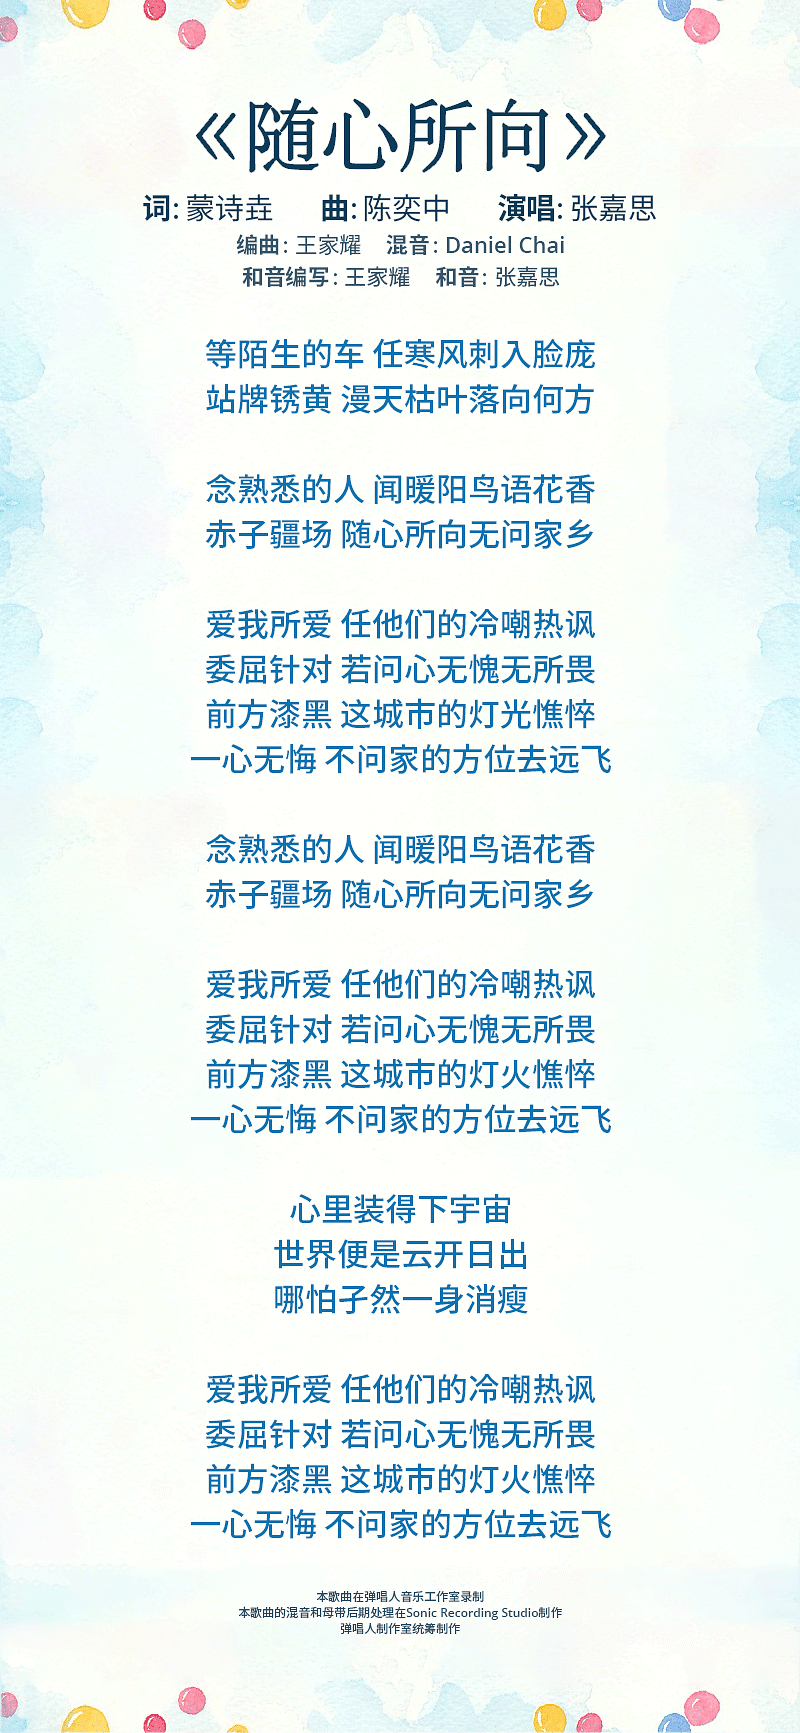 sui-xin-suo-xing-lyrics-mobile.png